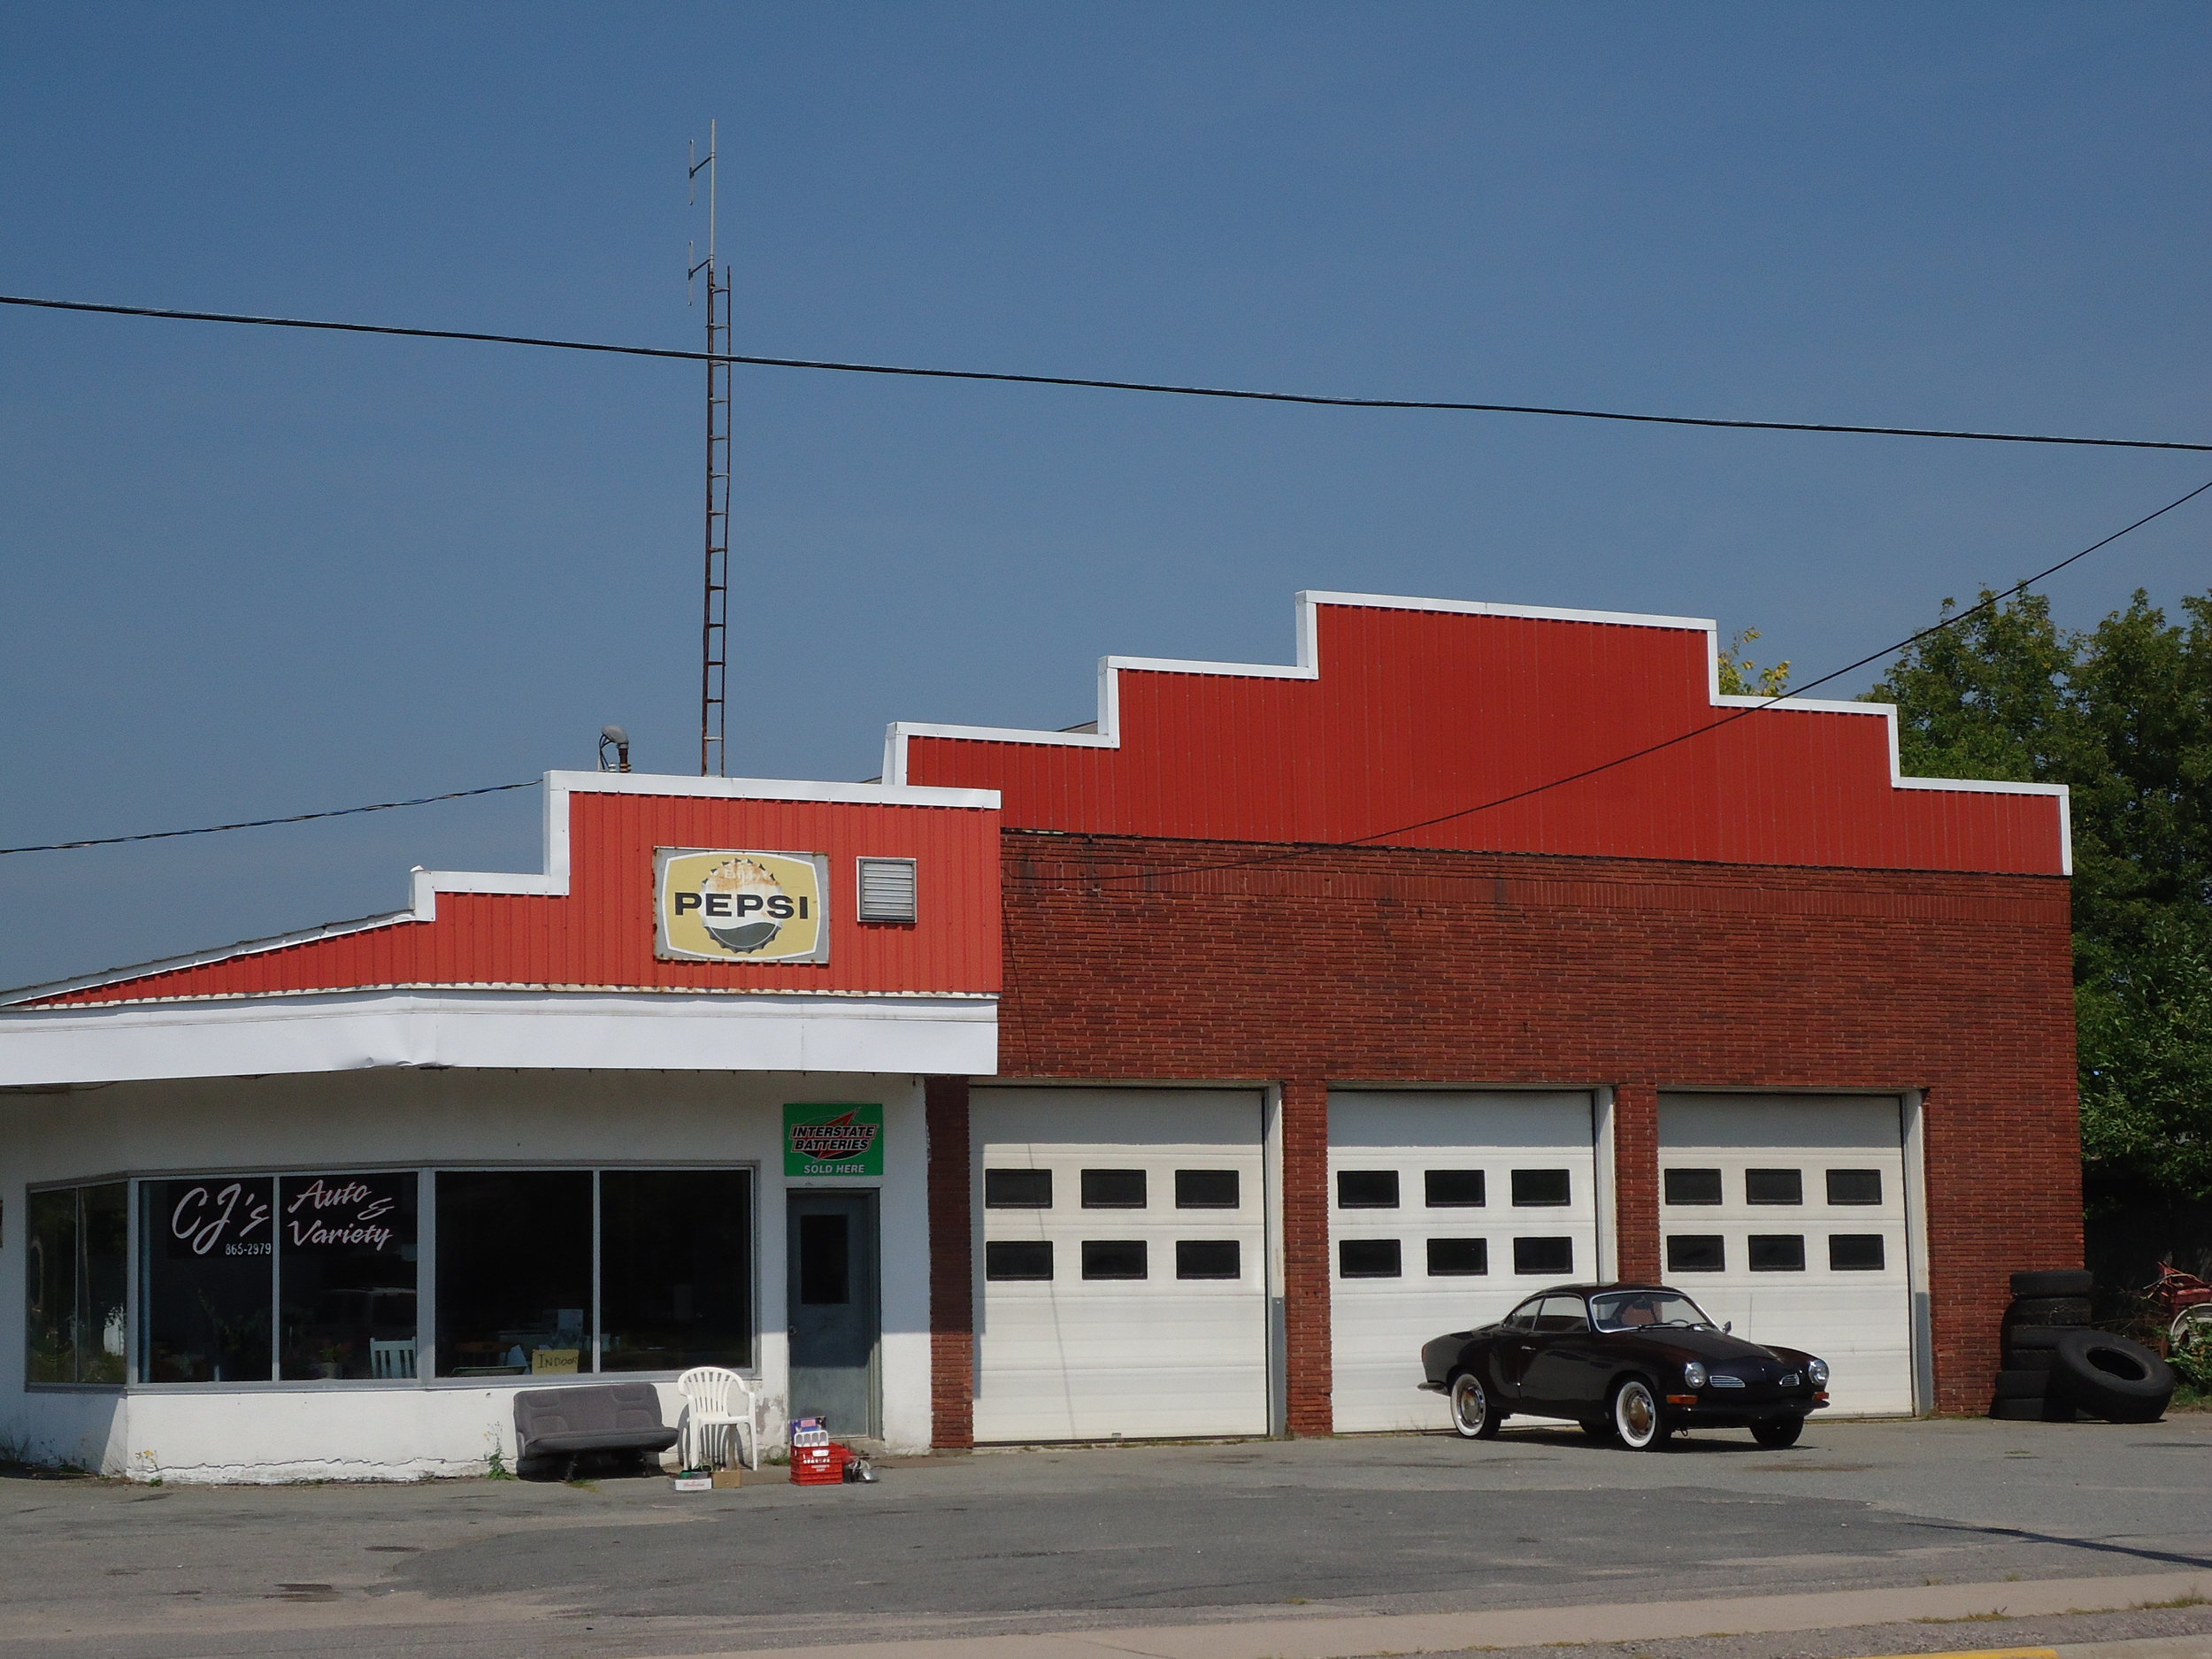  CJ's, northern Ontario, 08.2012 